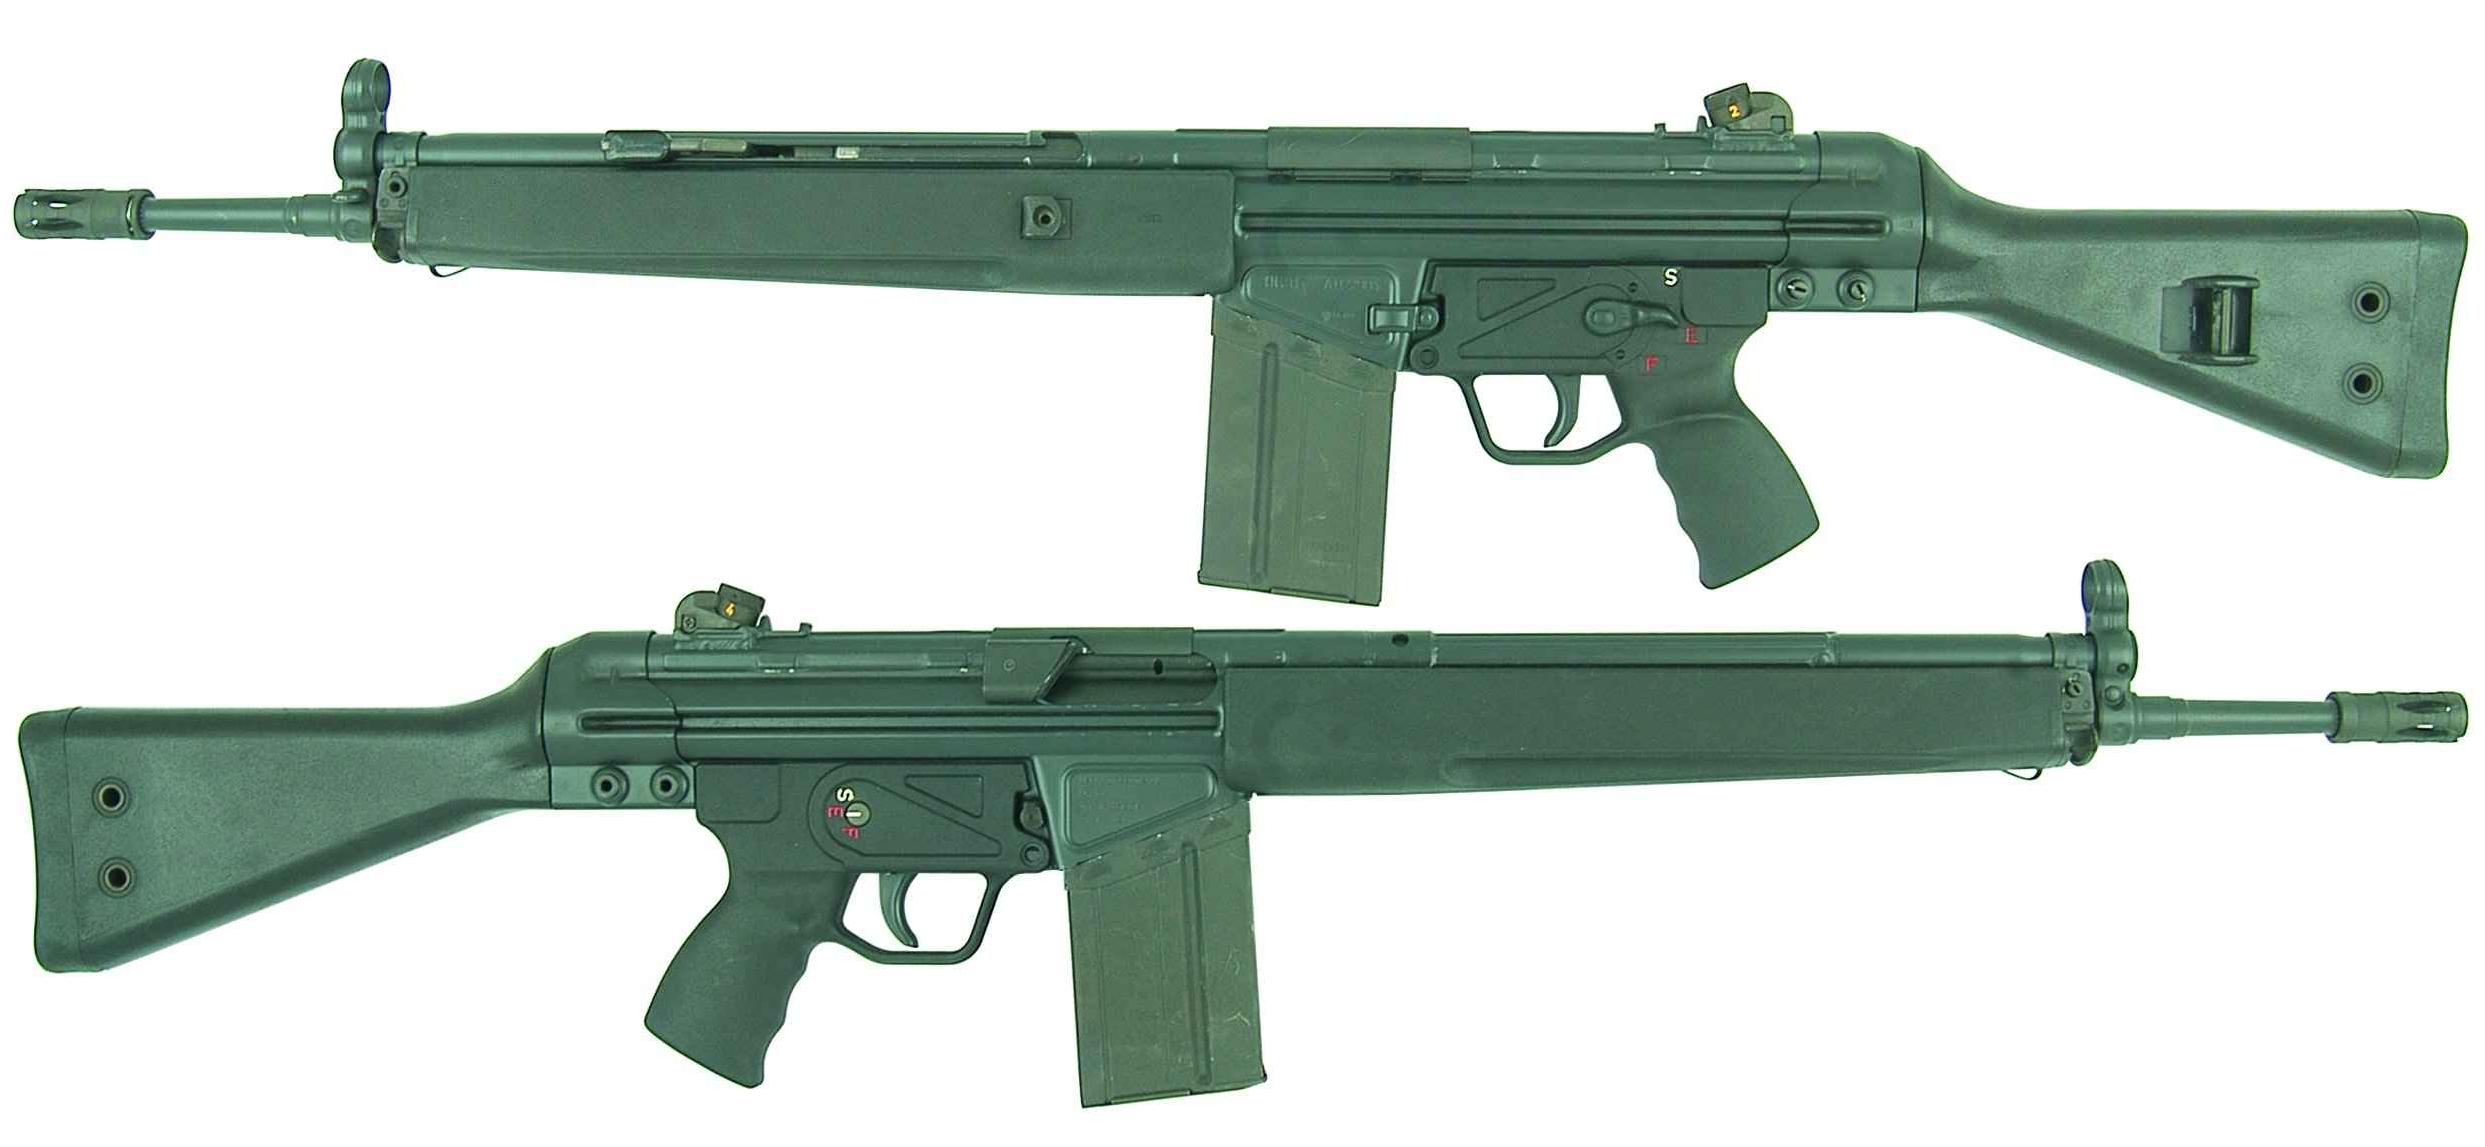 Шгш википедия. Хеклер Кох 3. G3 винтовка. Винтовка Хеклер и Кох г3. G3a3 Rifle.